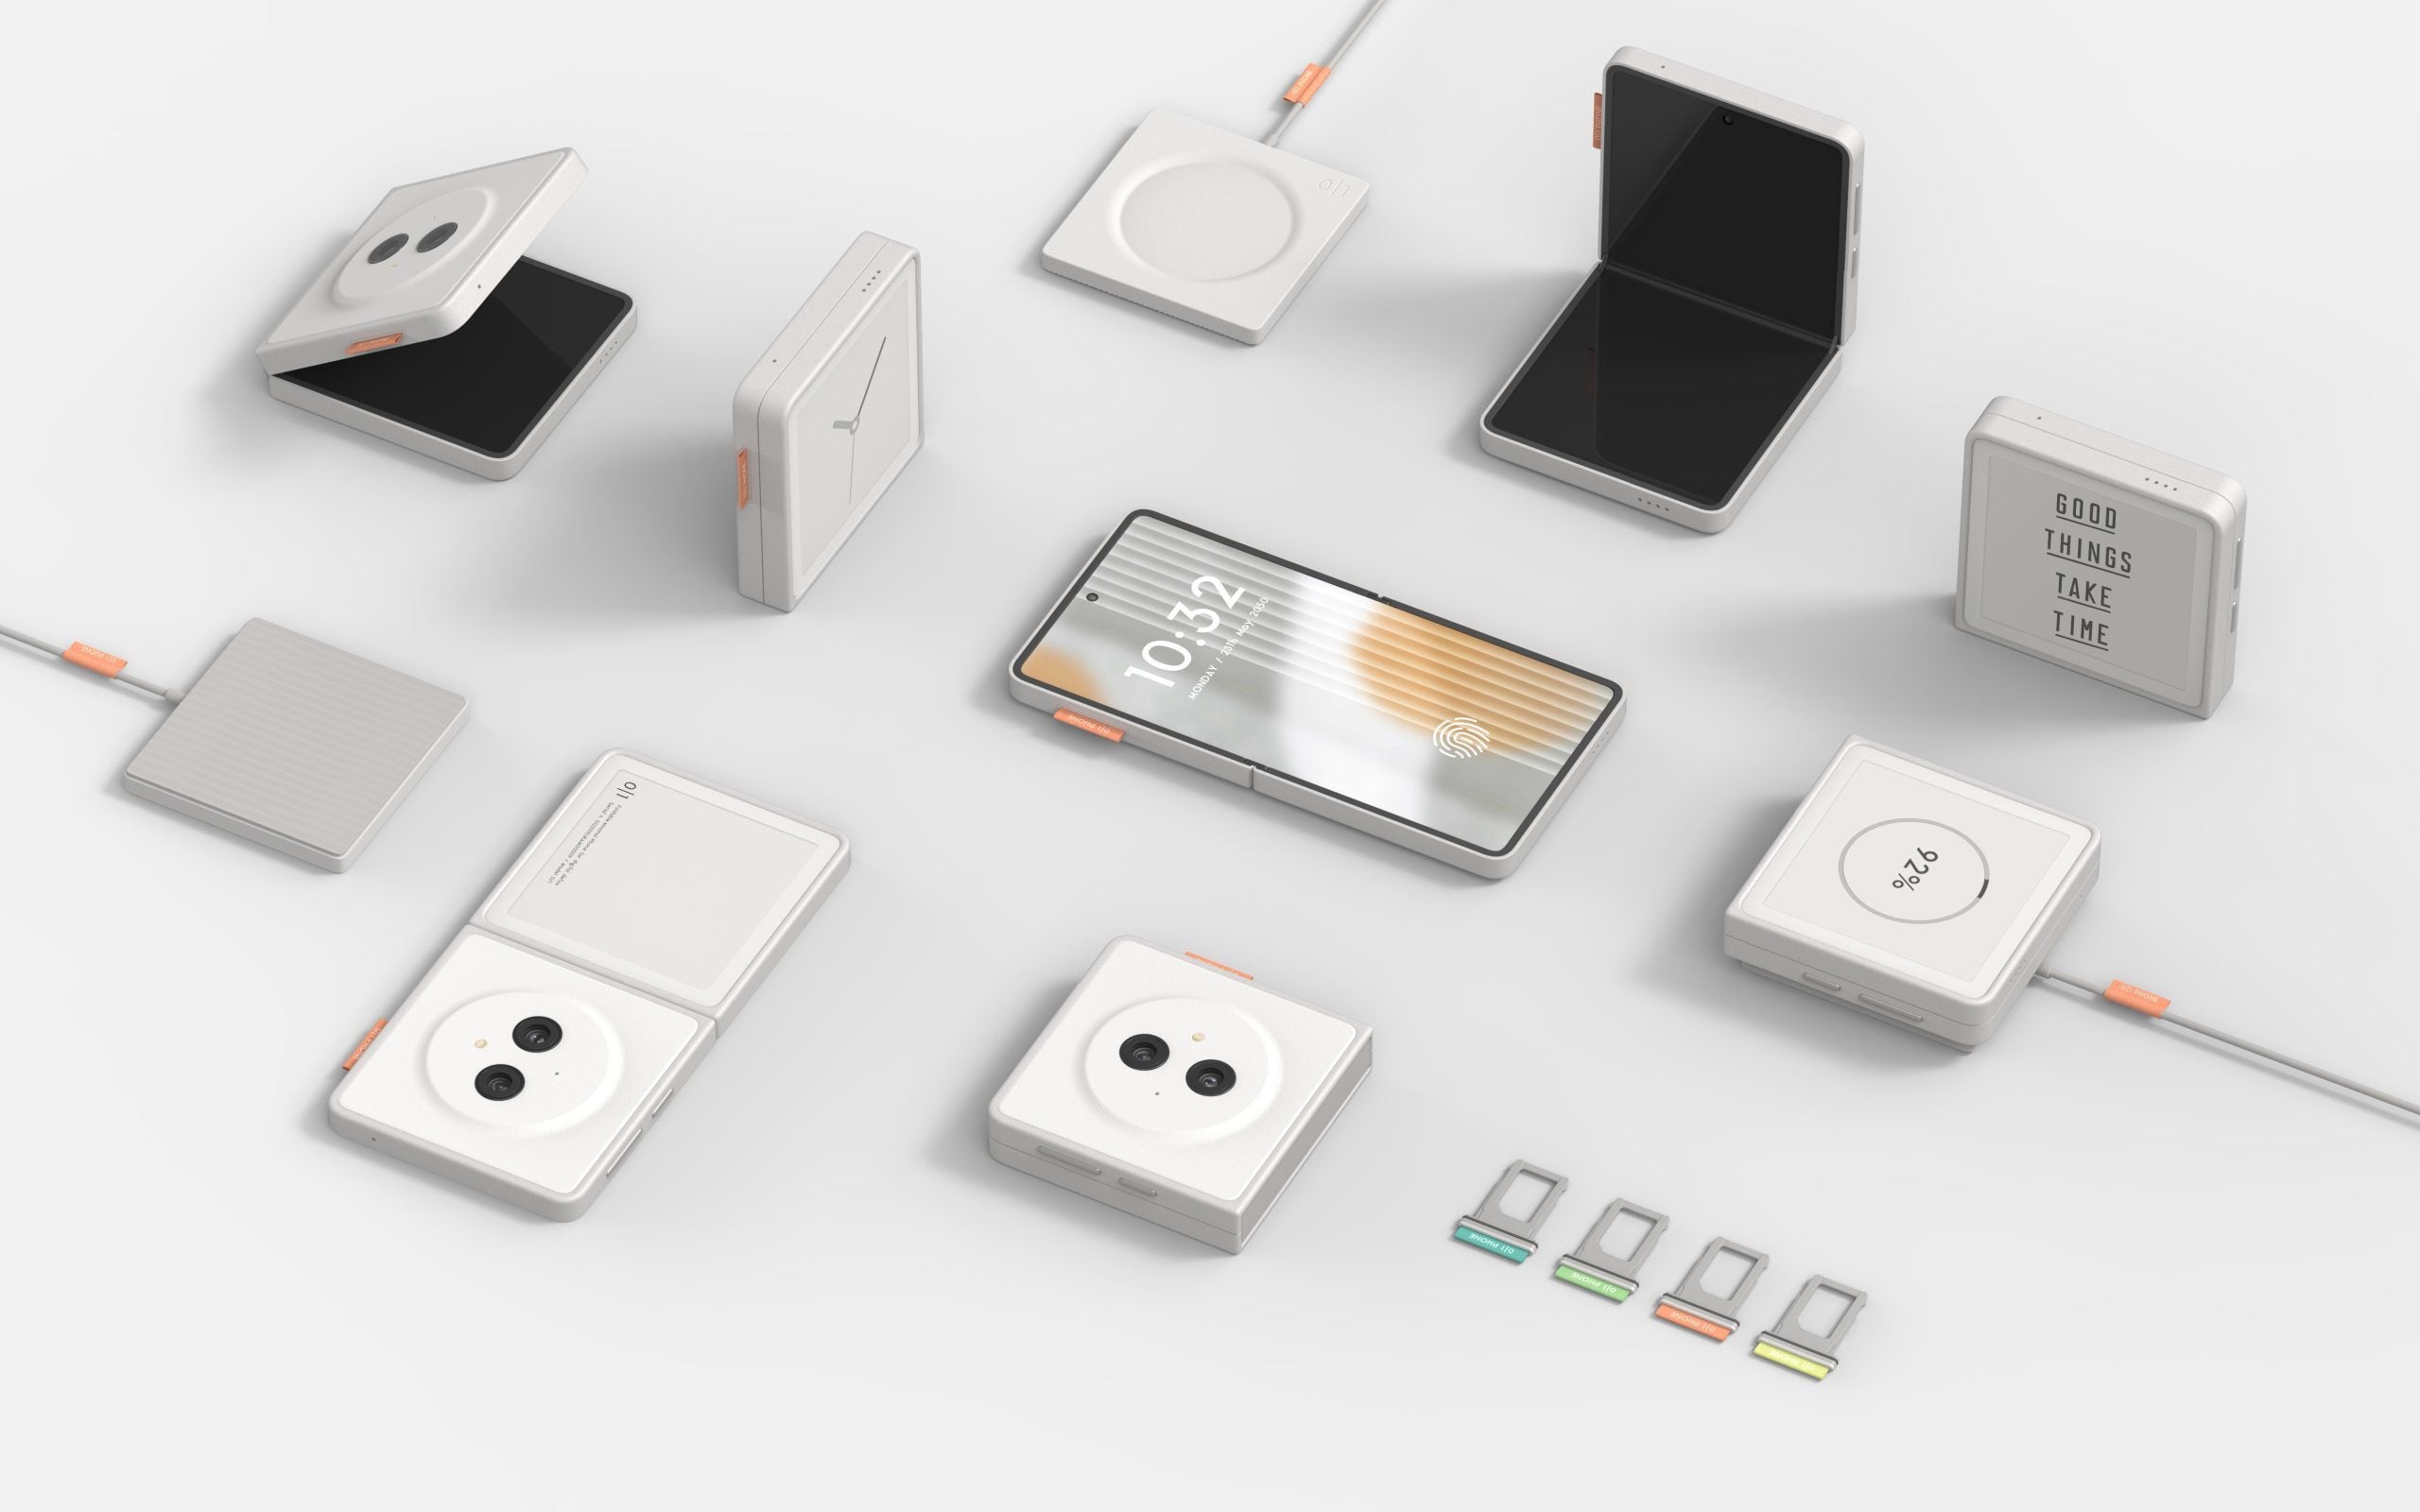 Image Credit– Andrea Mangone - Design innovation meets digital detox in the 0/1 Phone concept